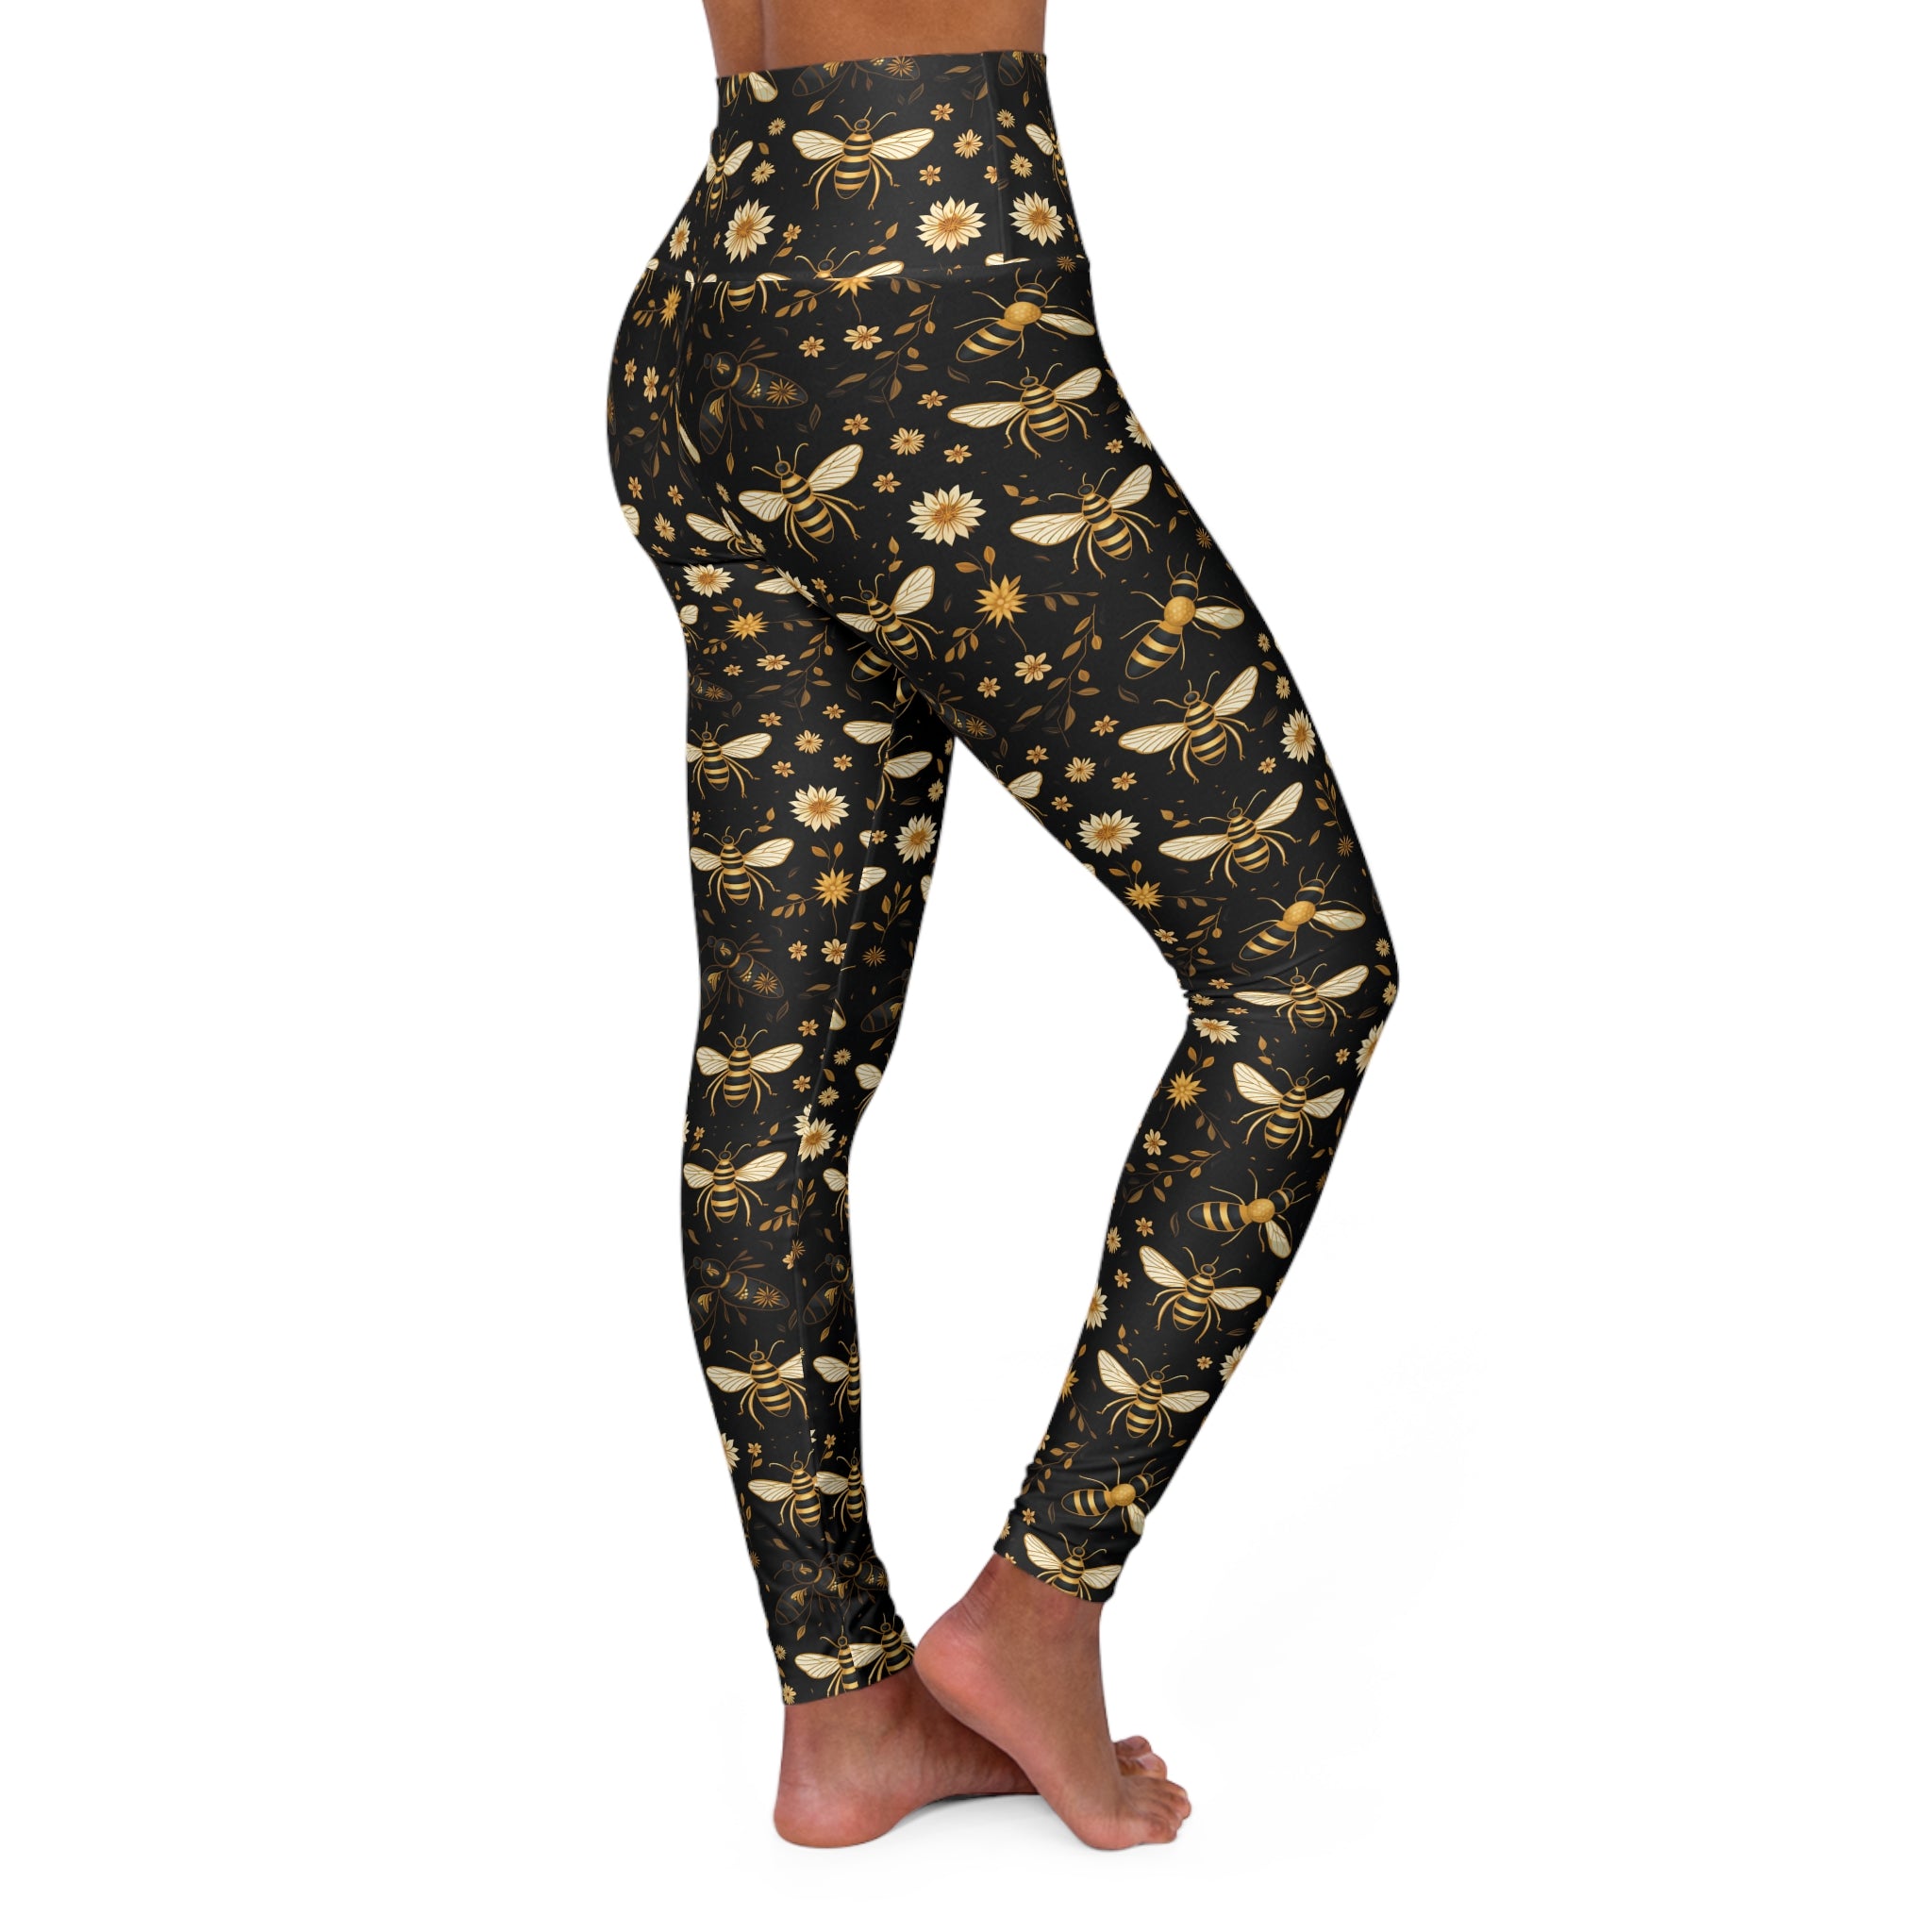 Bee Print Gym Leggings for Women S-2XL - High Waist Yoga Pants